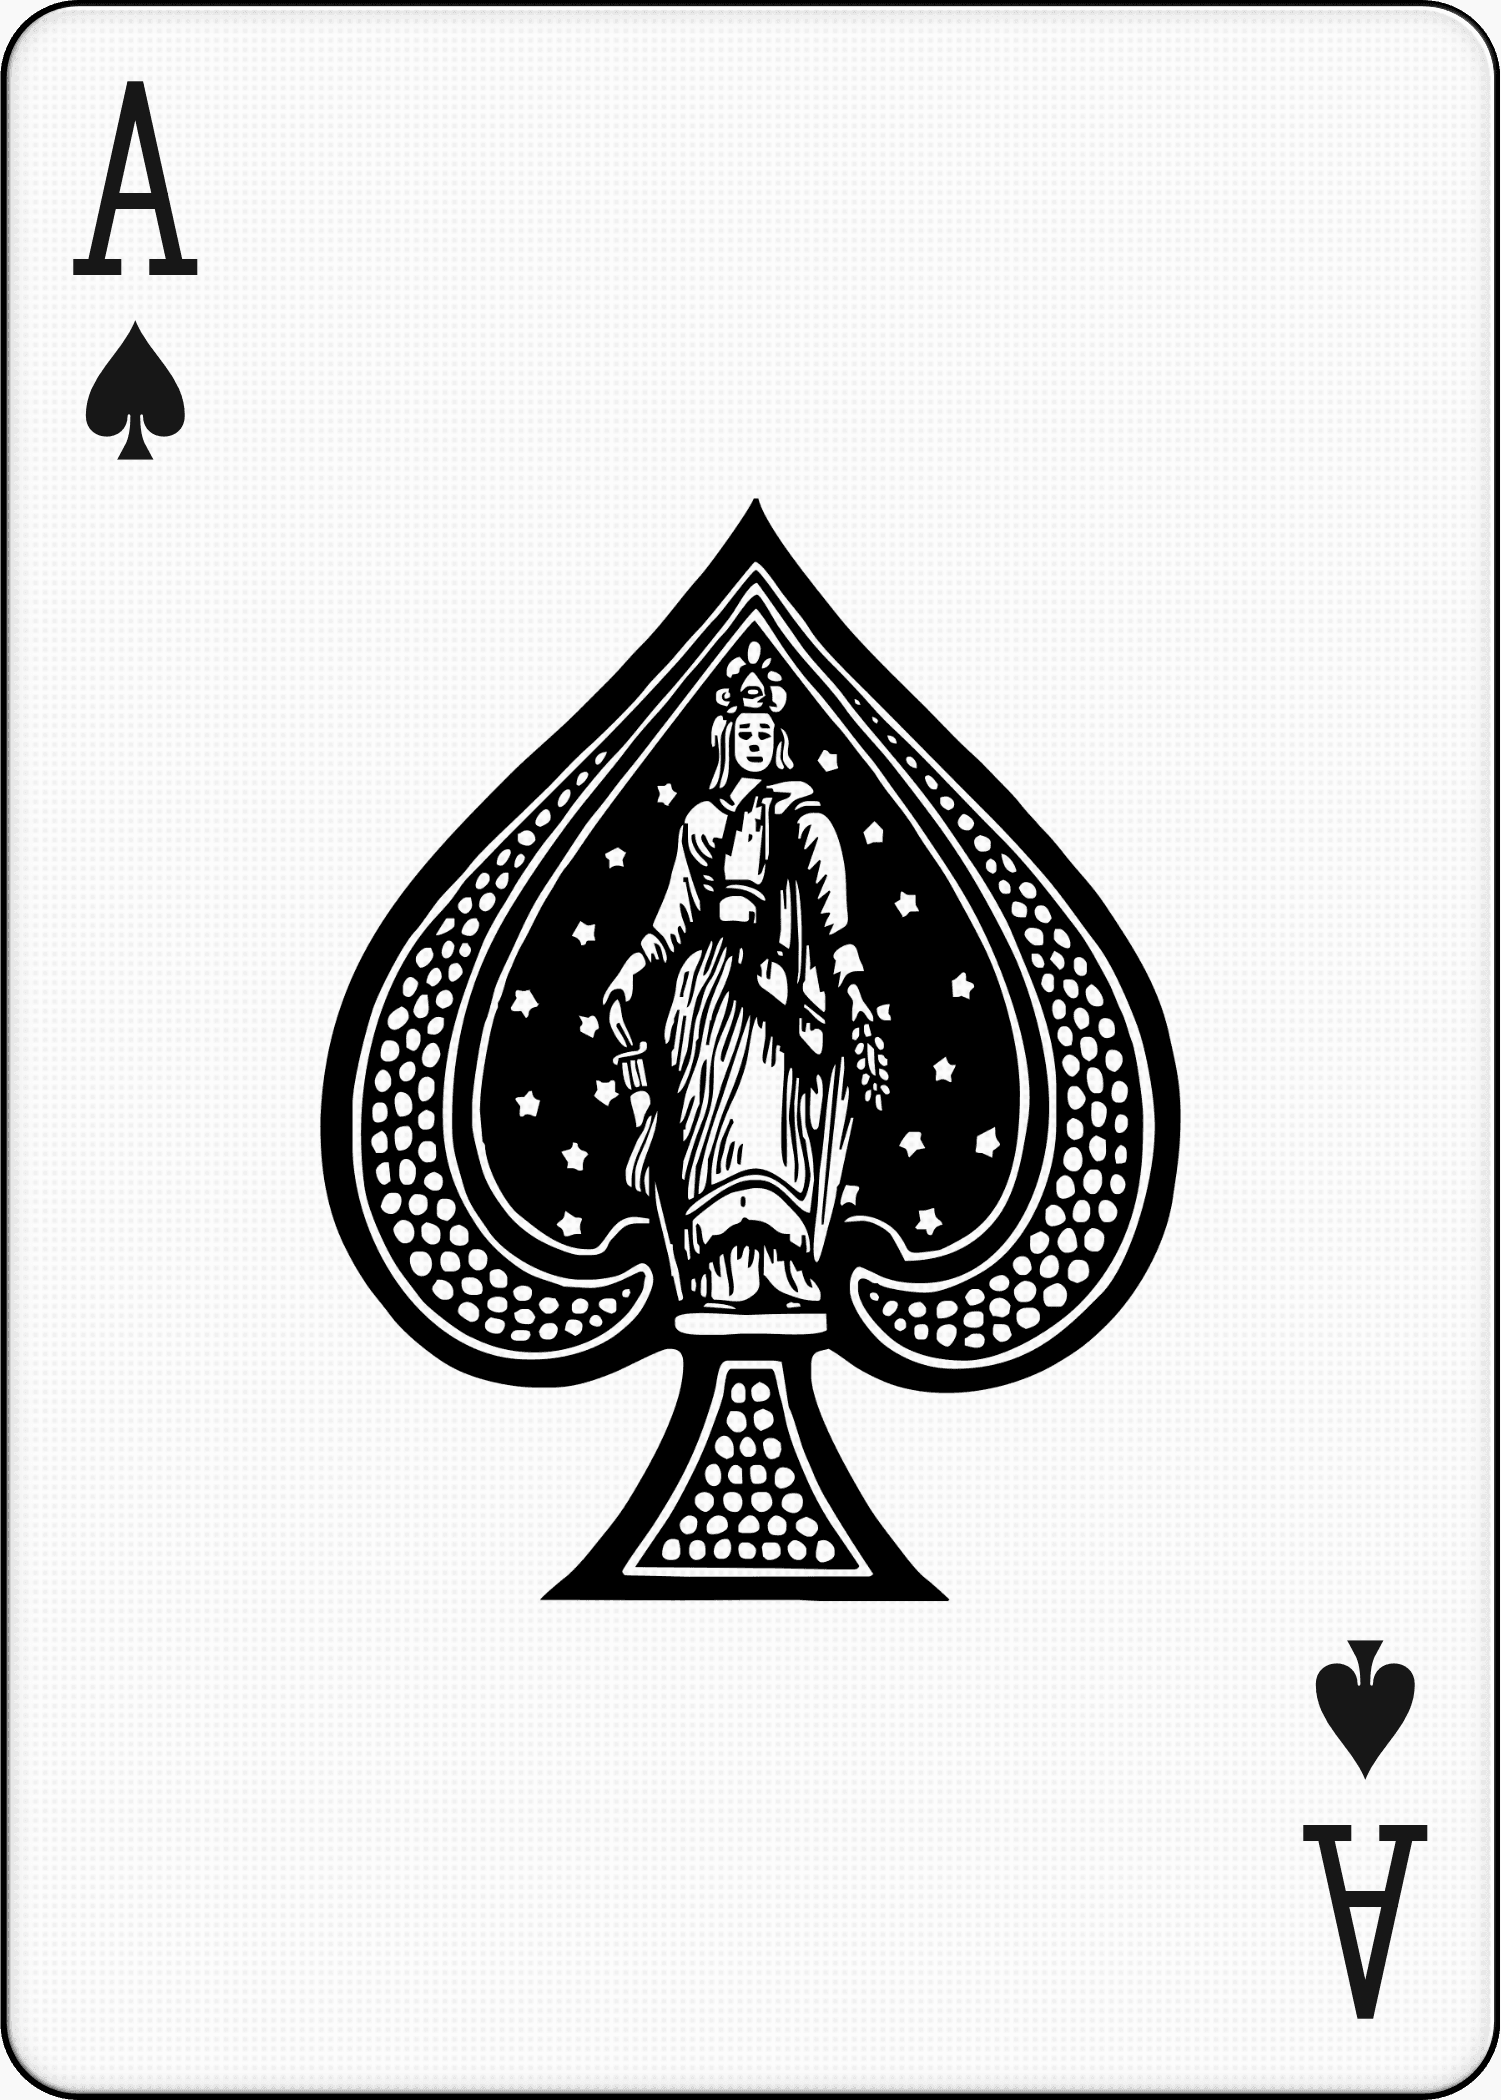 Ace of Diamonds - Ethereum Poker Cards